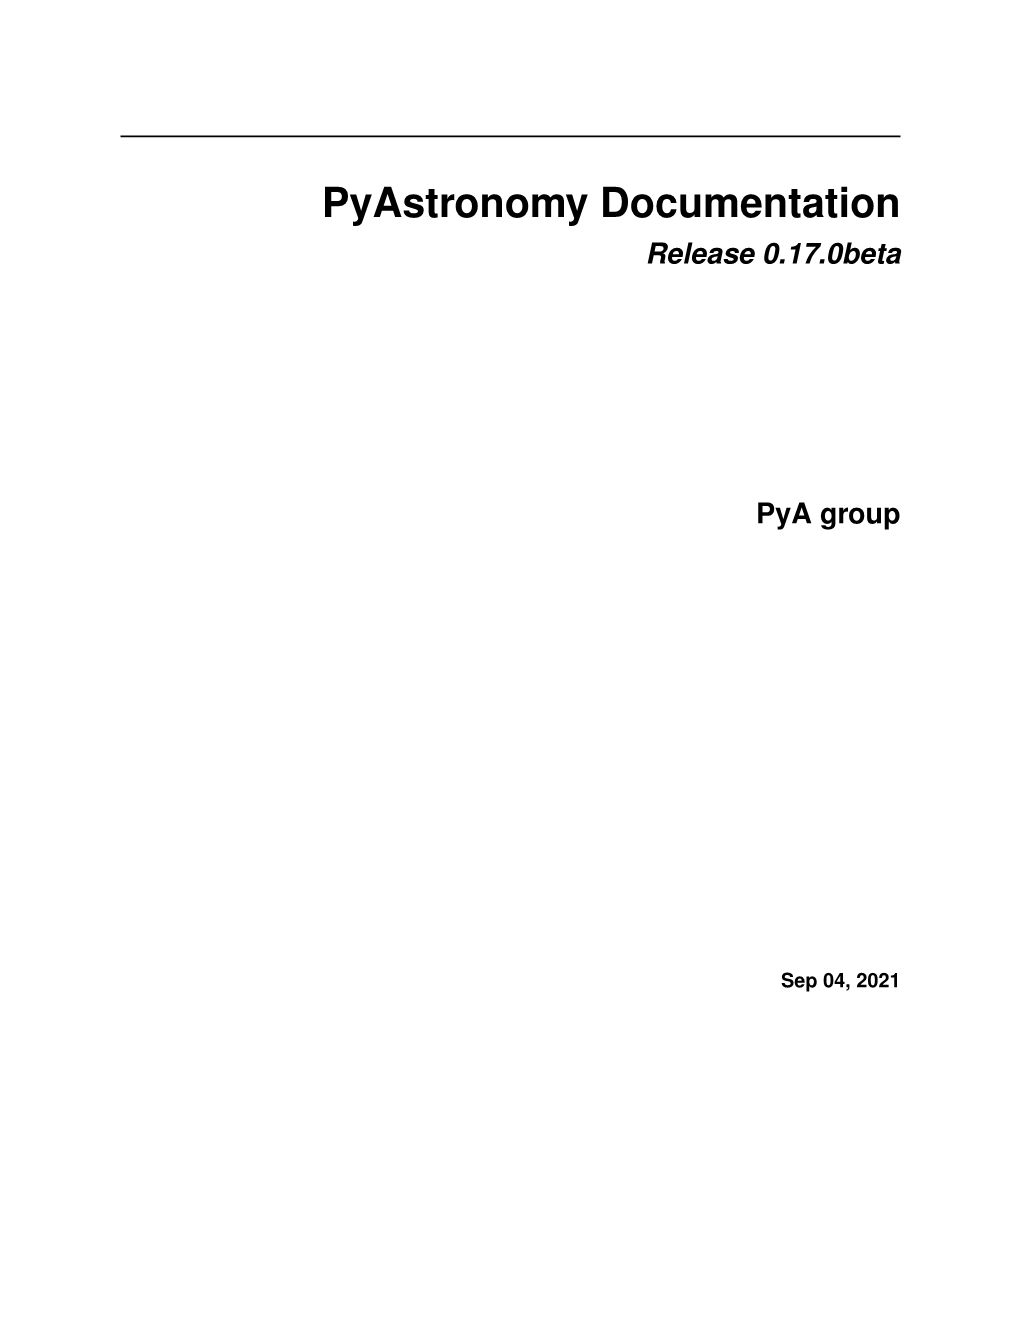 Pyastronomy Documentation Release 0.17.0Beta